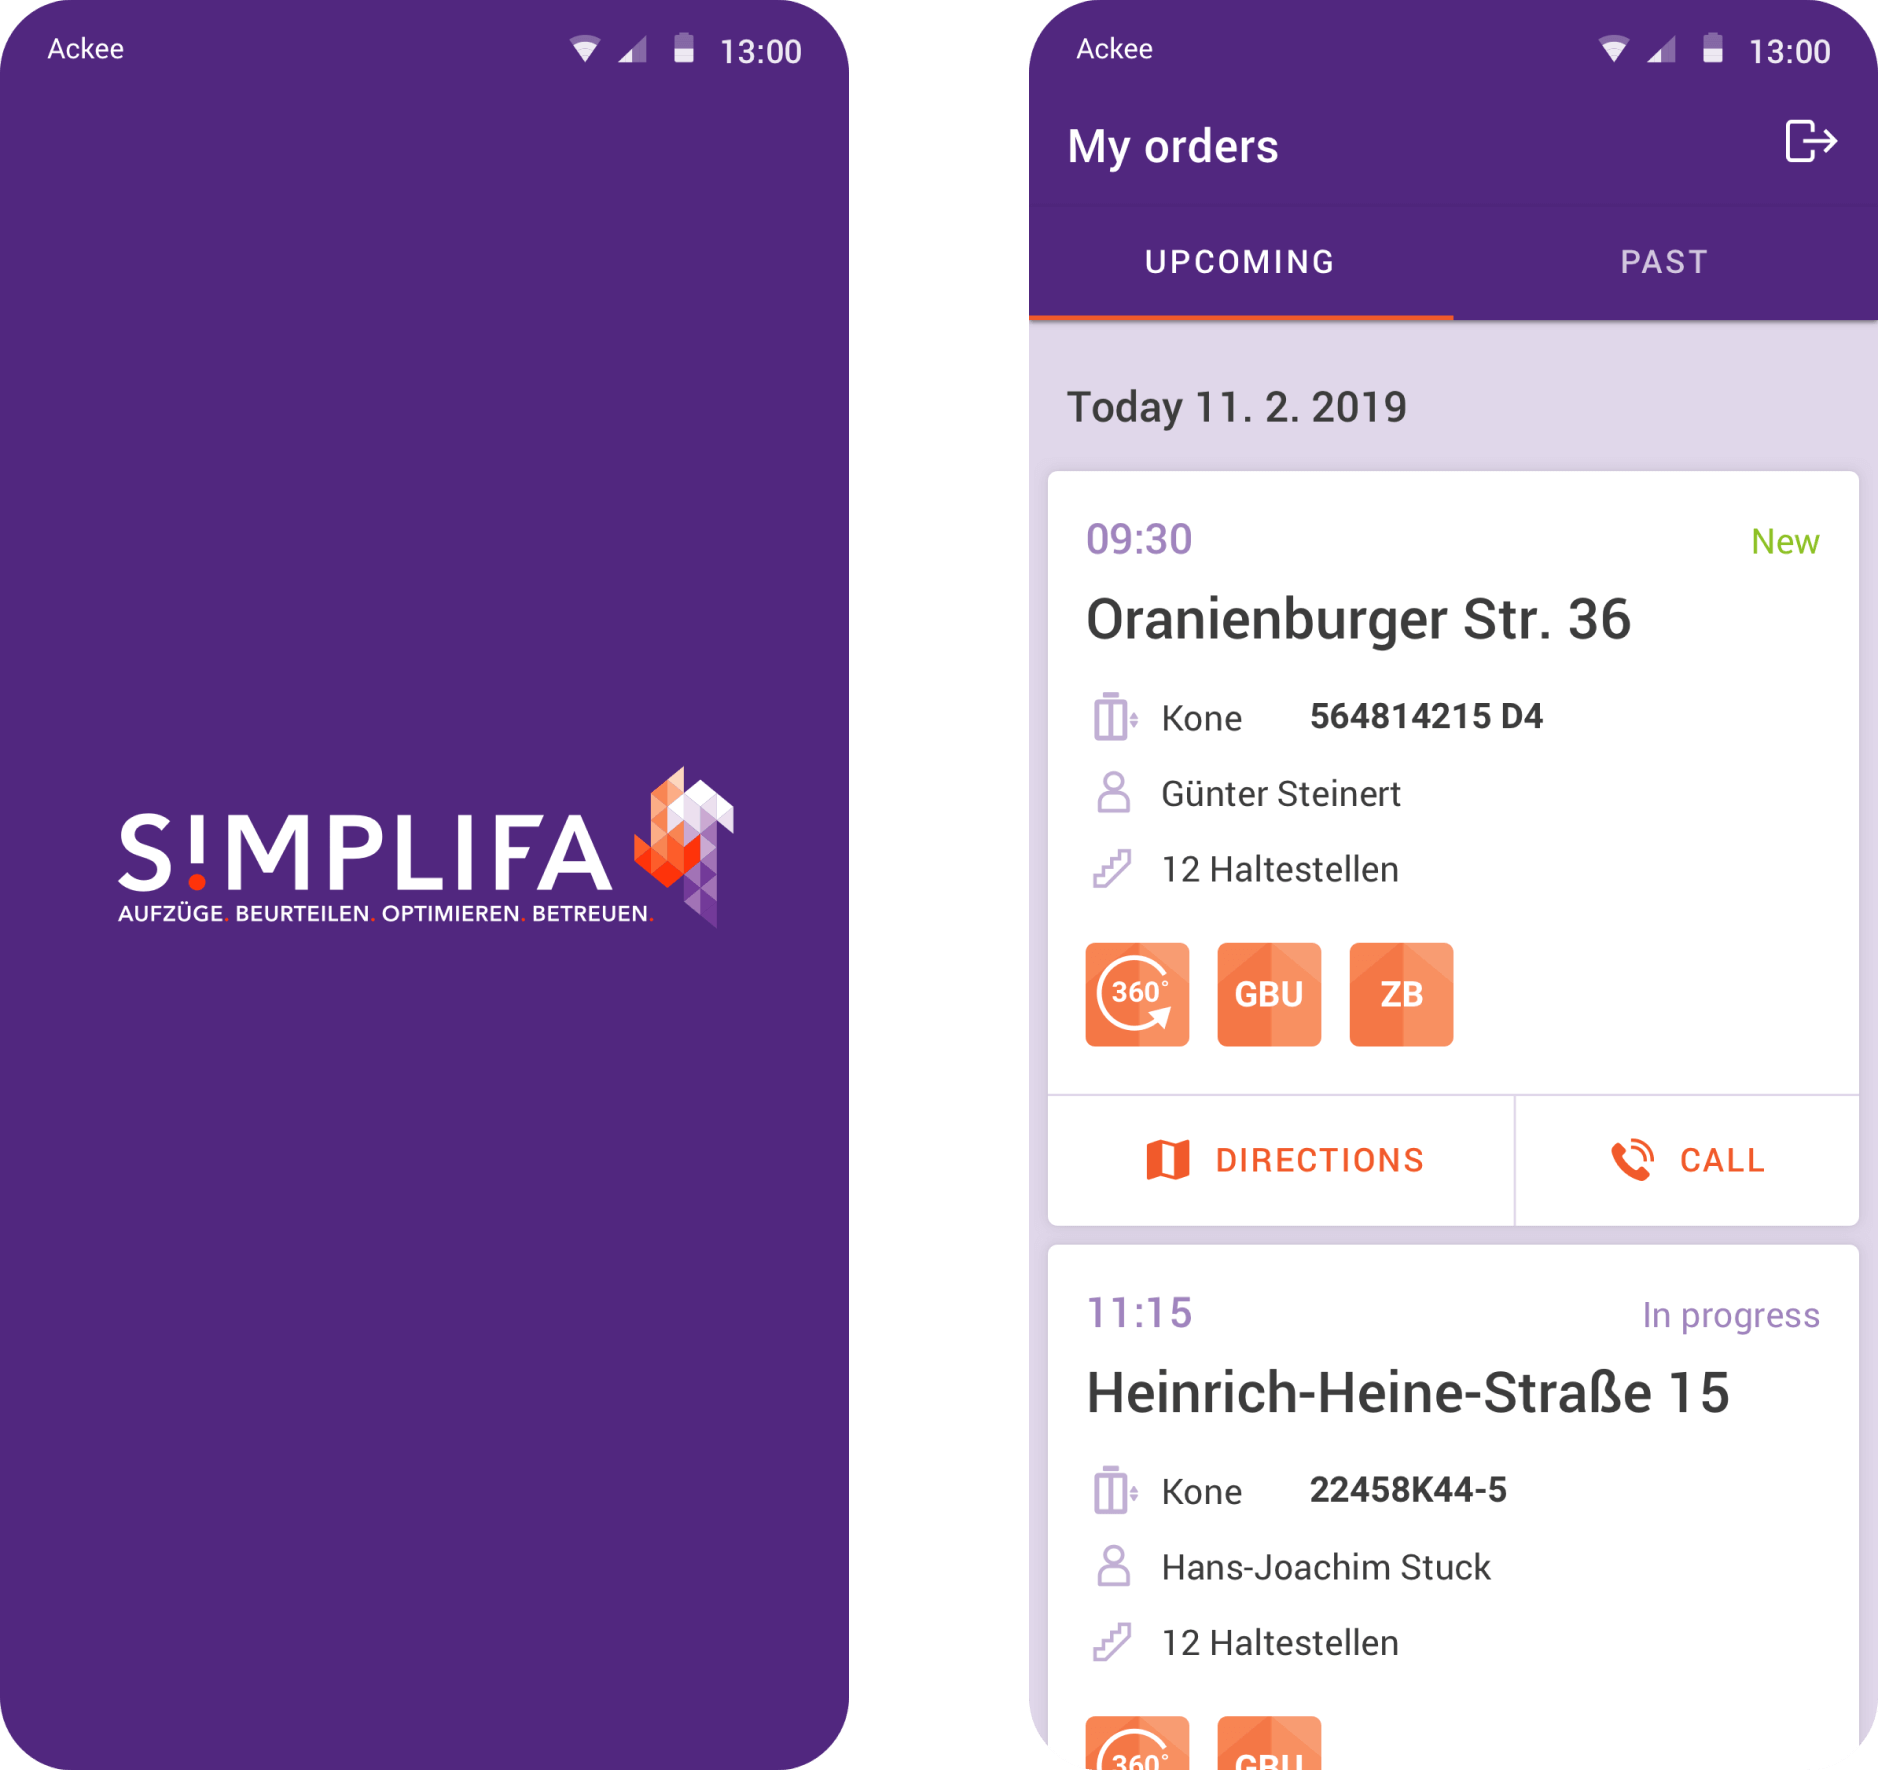 Our simplifa mobile app